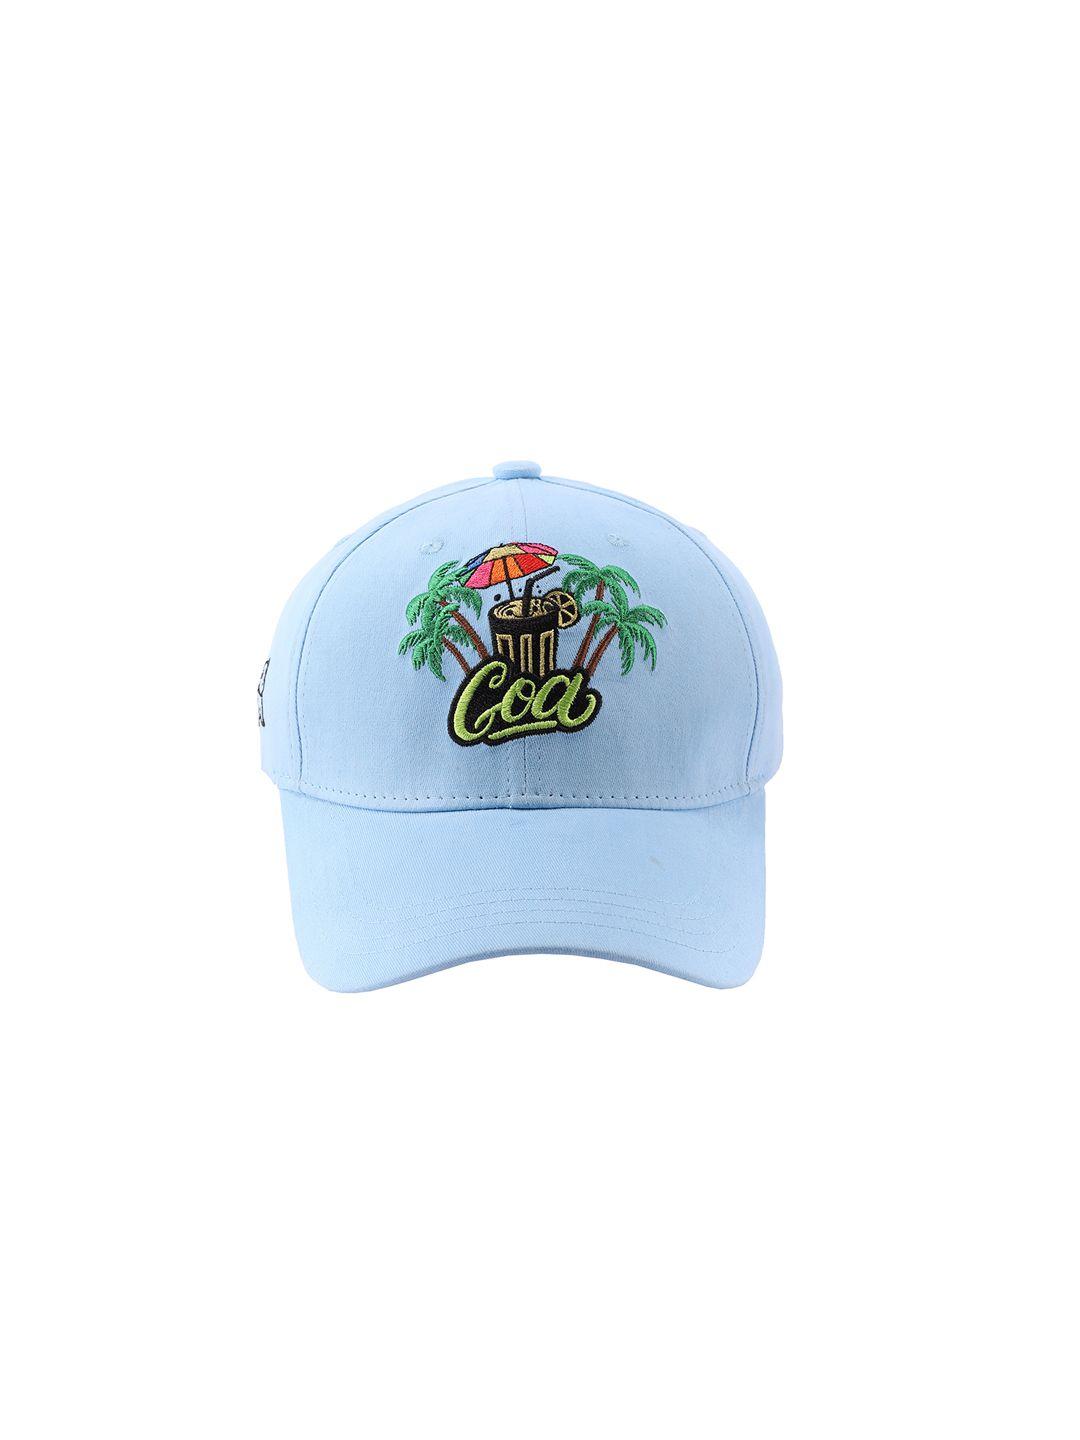 cap shap unisex blue embroidered baseball cap